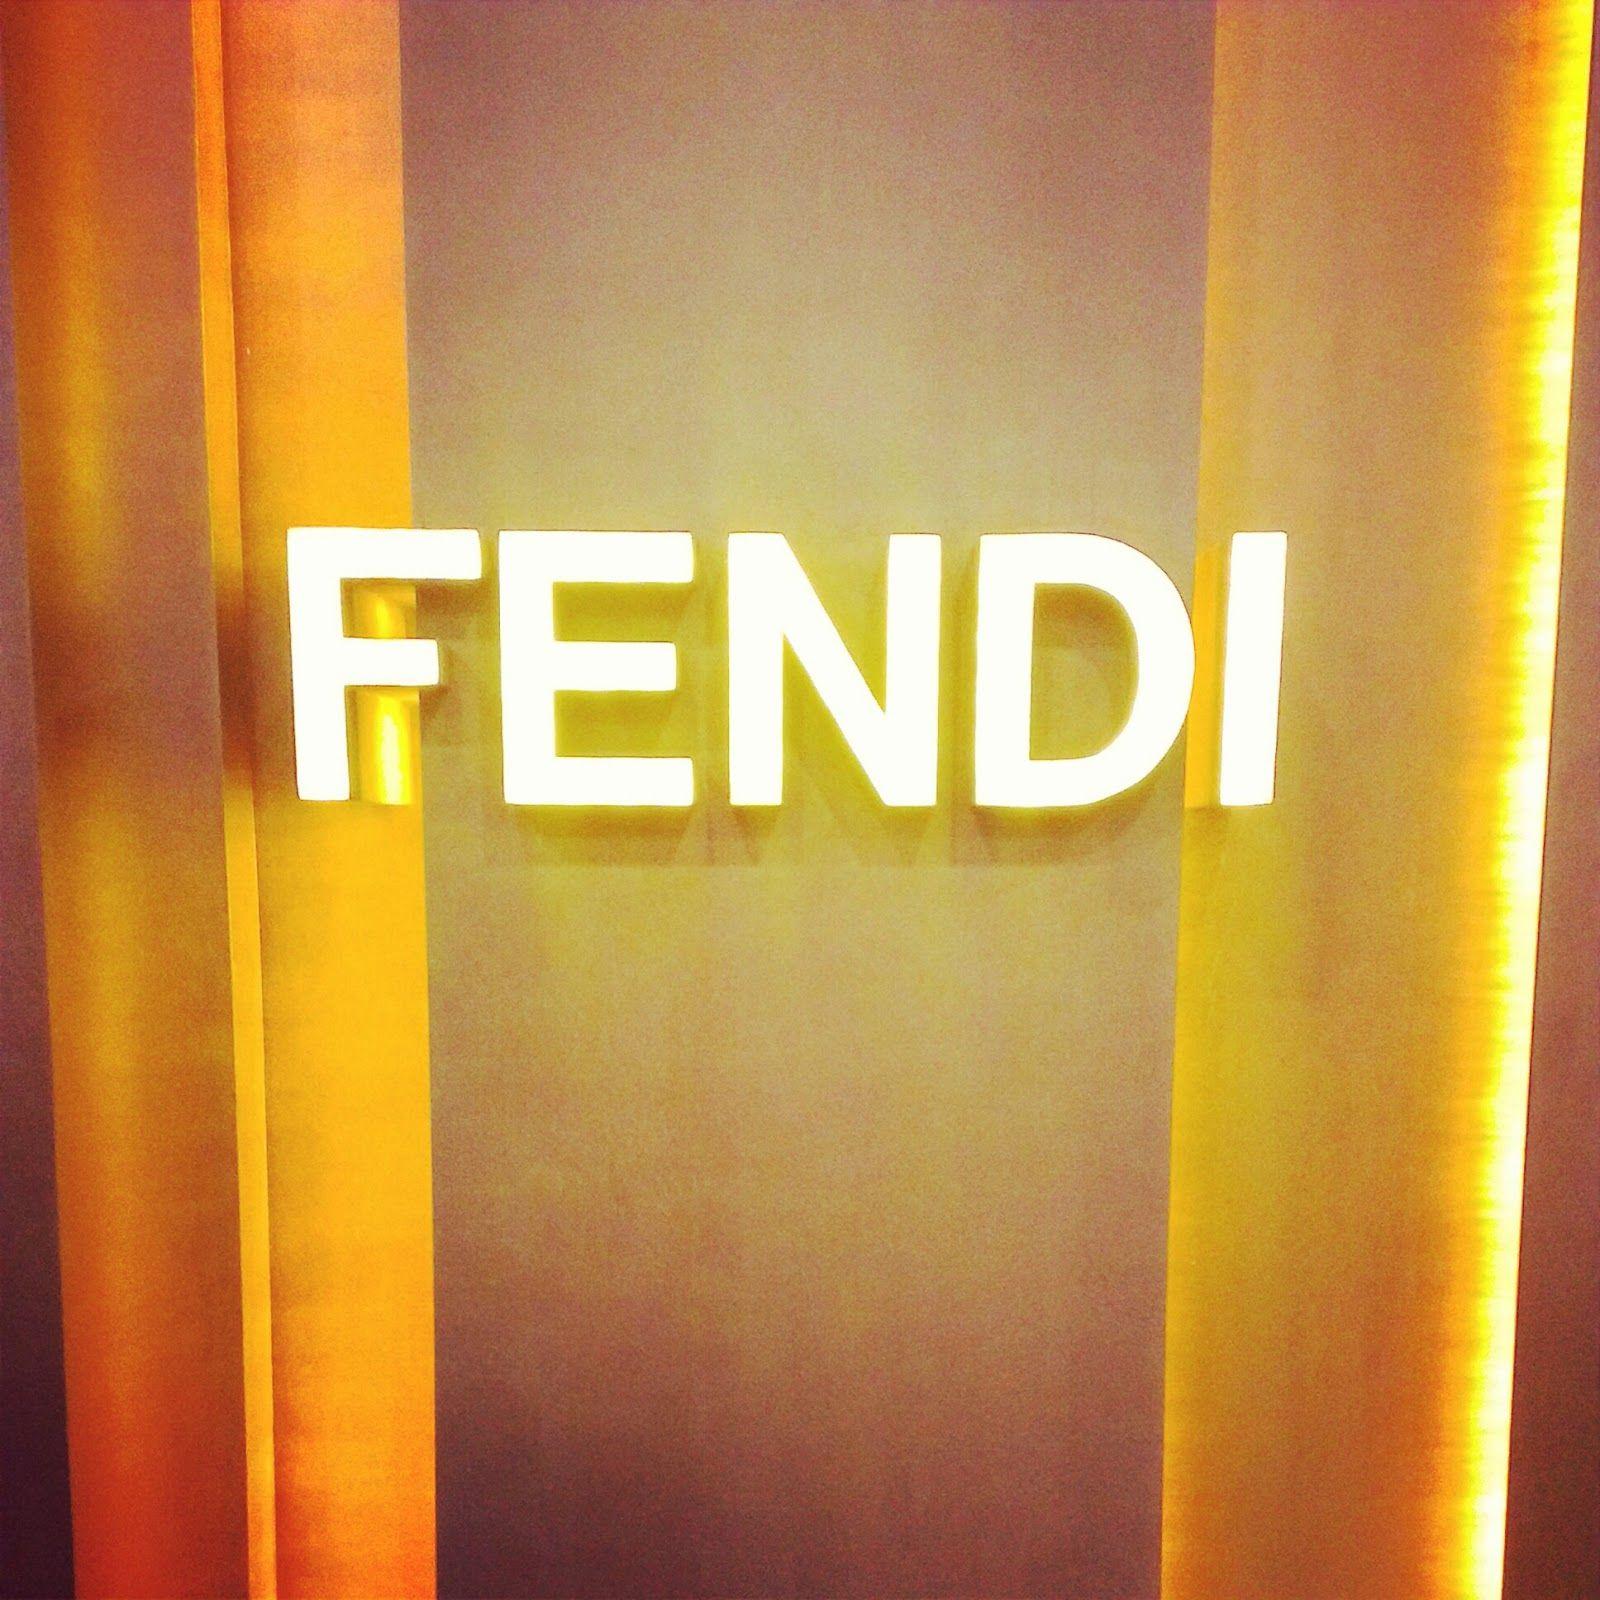 Download wallpapers Fendi yellow logo, 4k, yellow brickwall, Fendi logo,  brands, Fendi neon logo, Fendi for desktop free. Pictures for desktop free